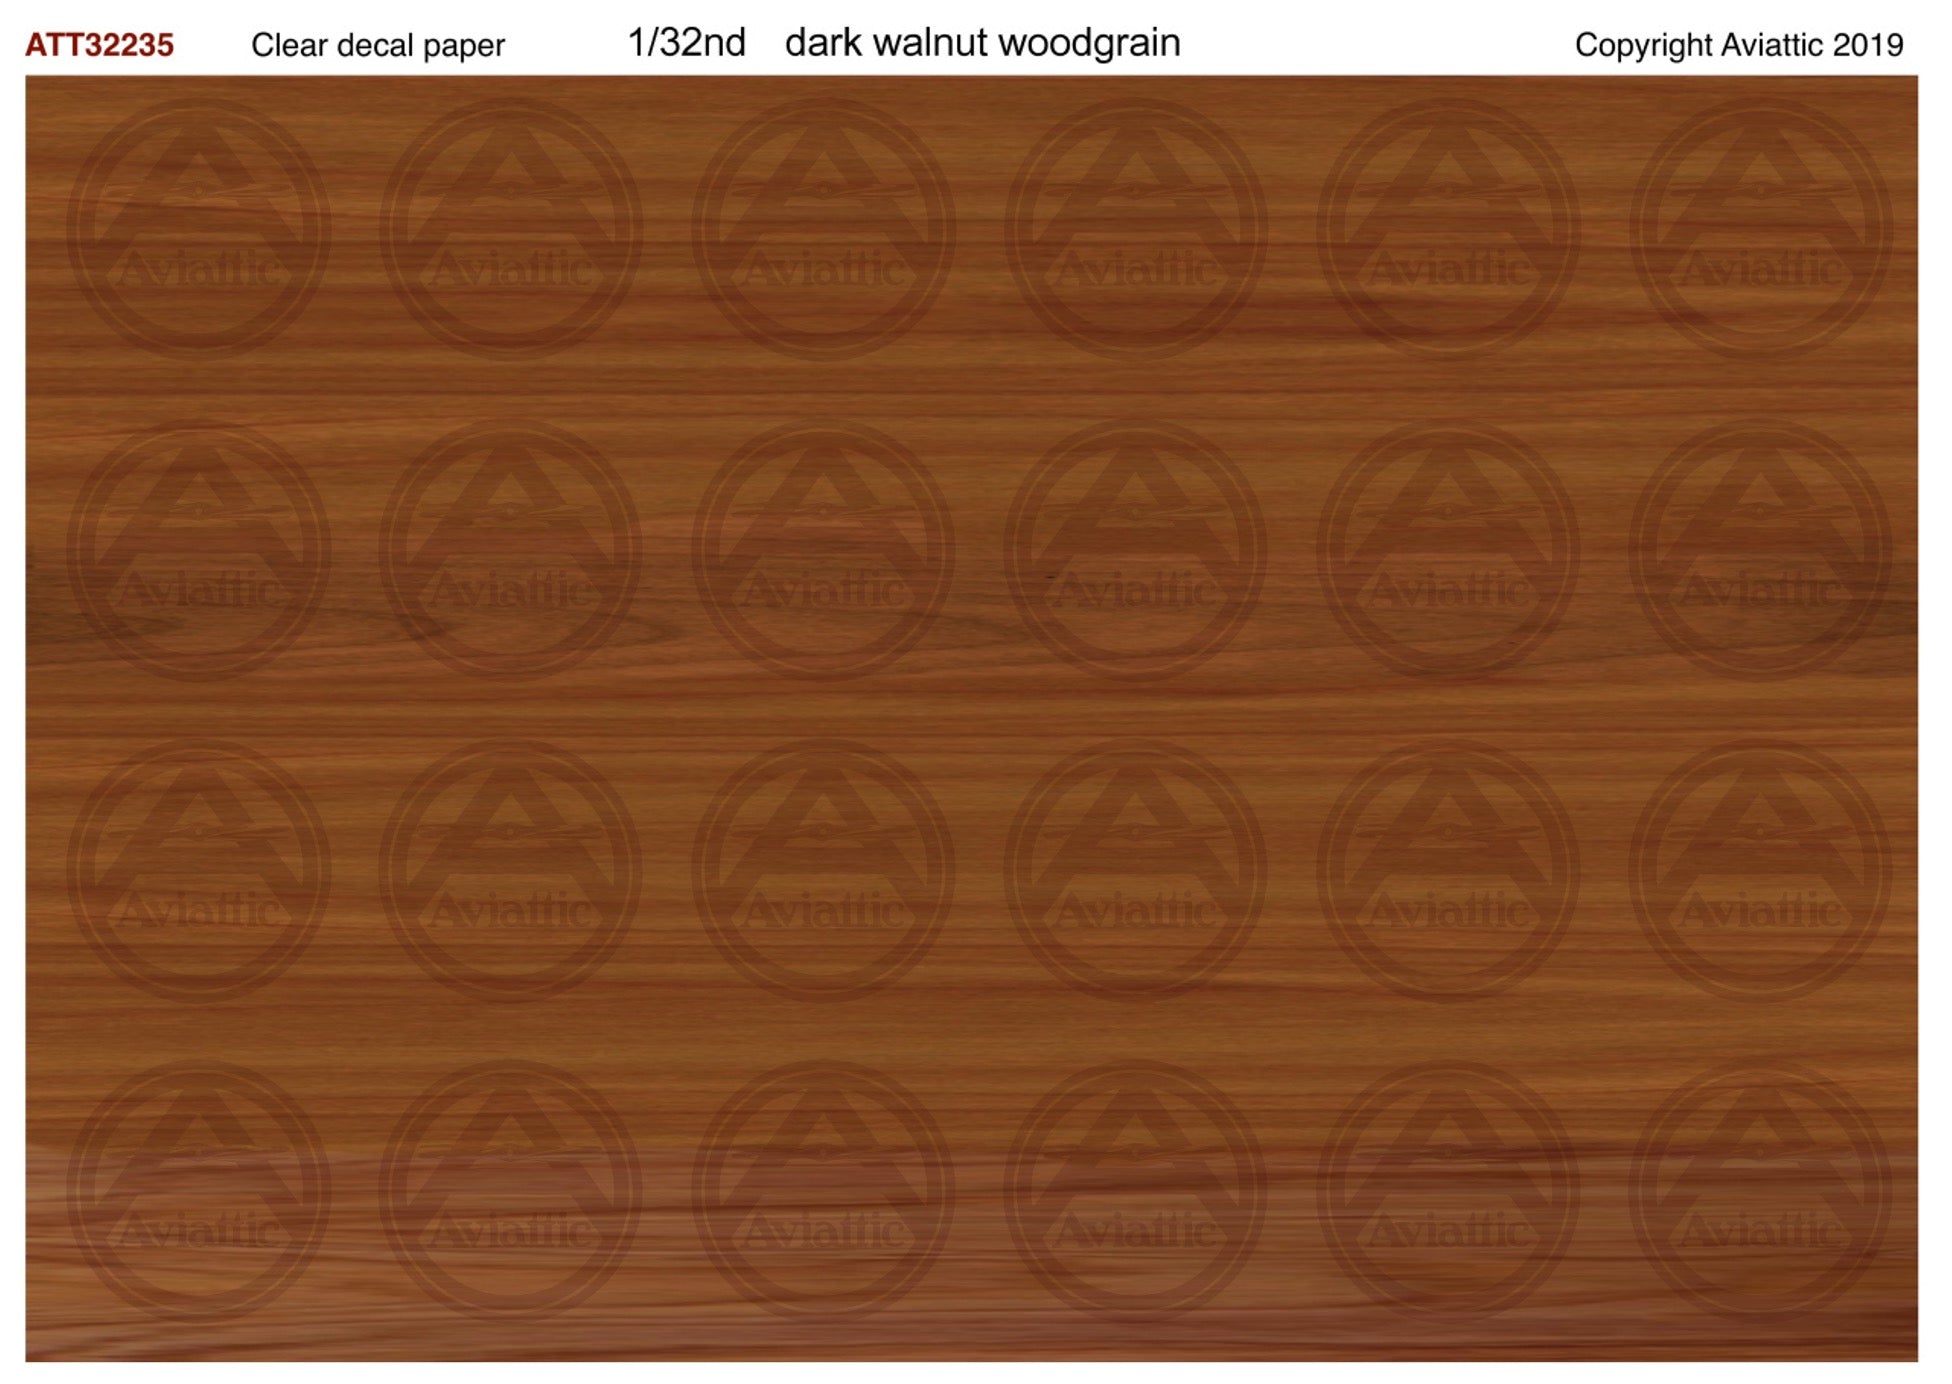 Walnut/mahogany/birch plywood - dark